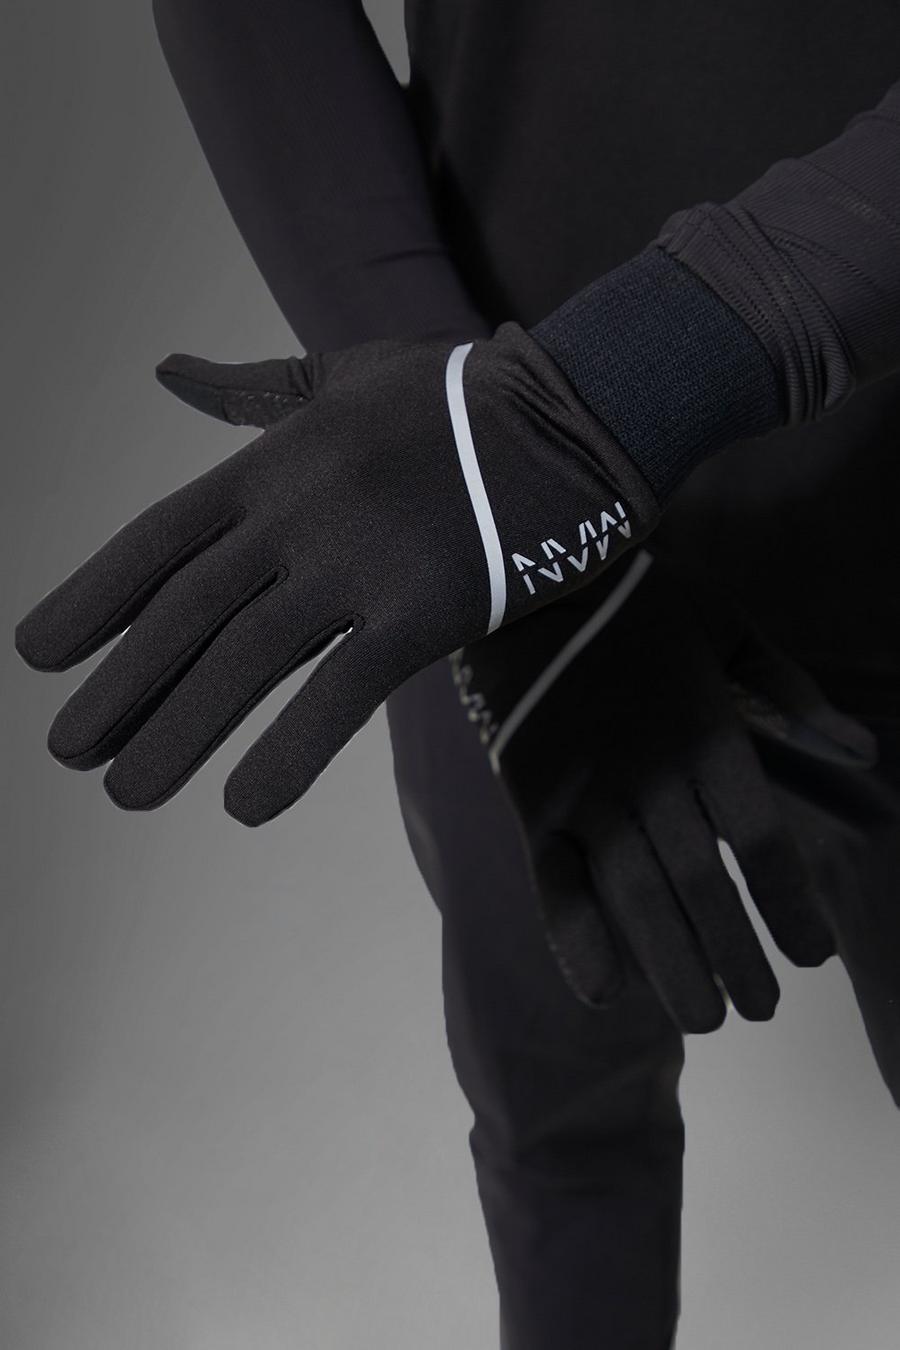 Man Active Performance Handschuhe, Black schwarz